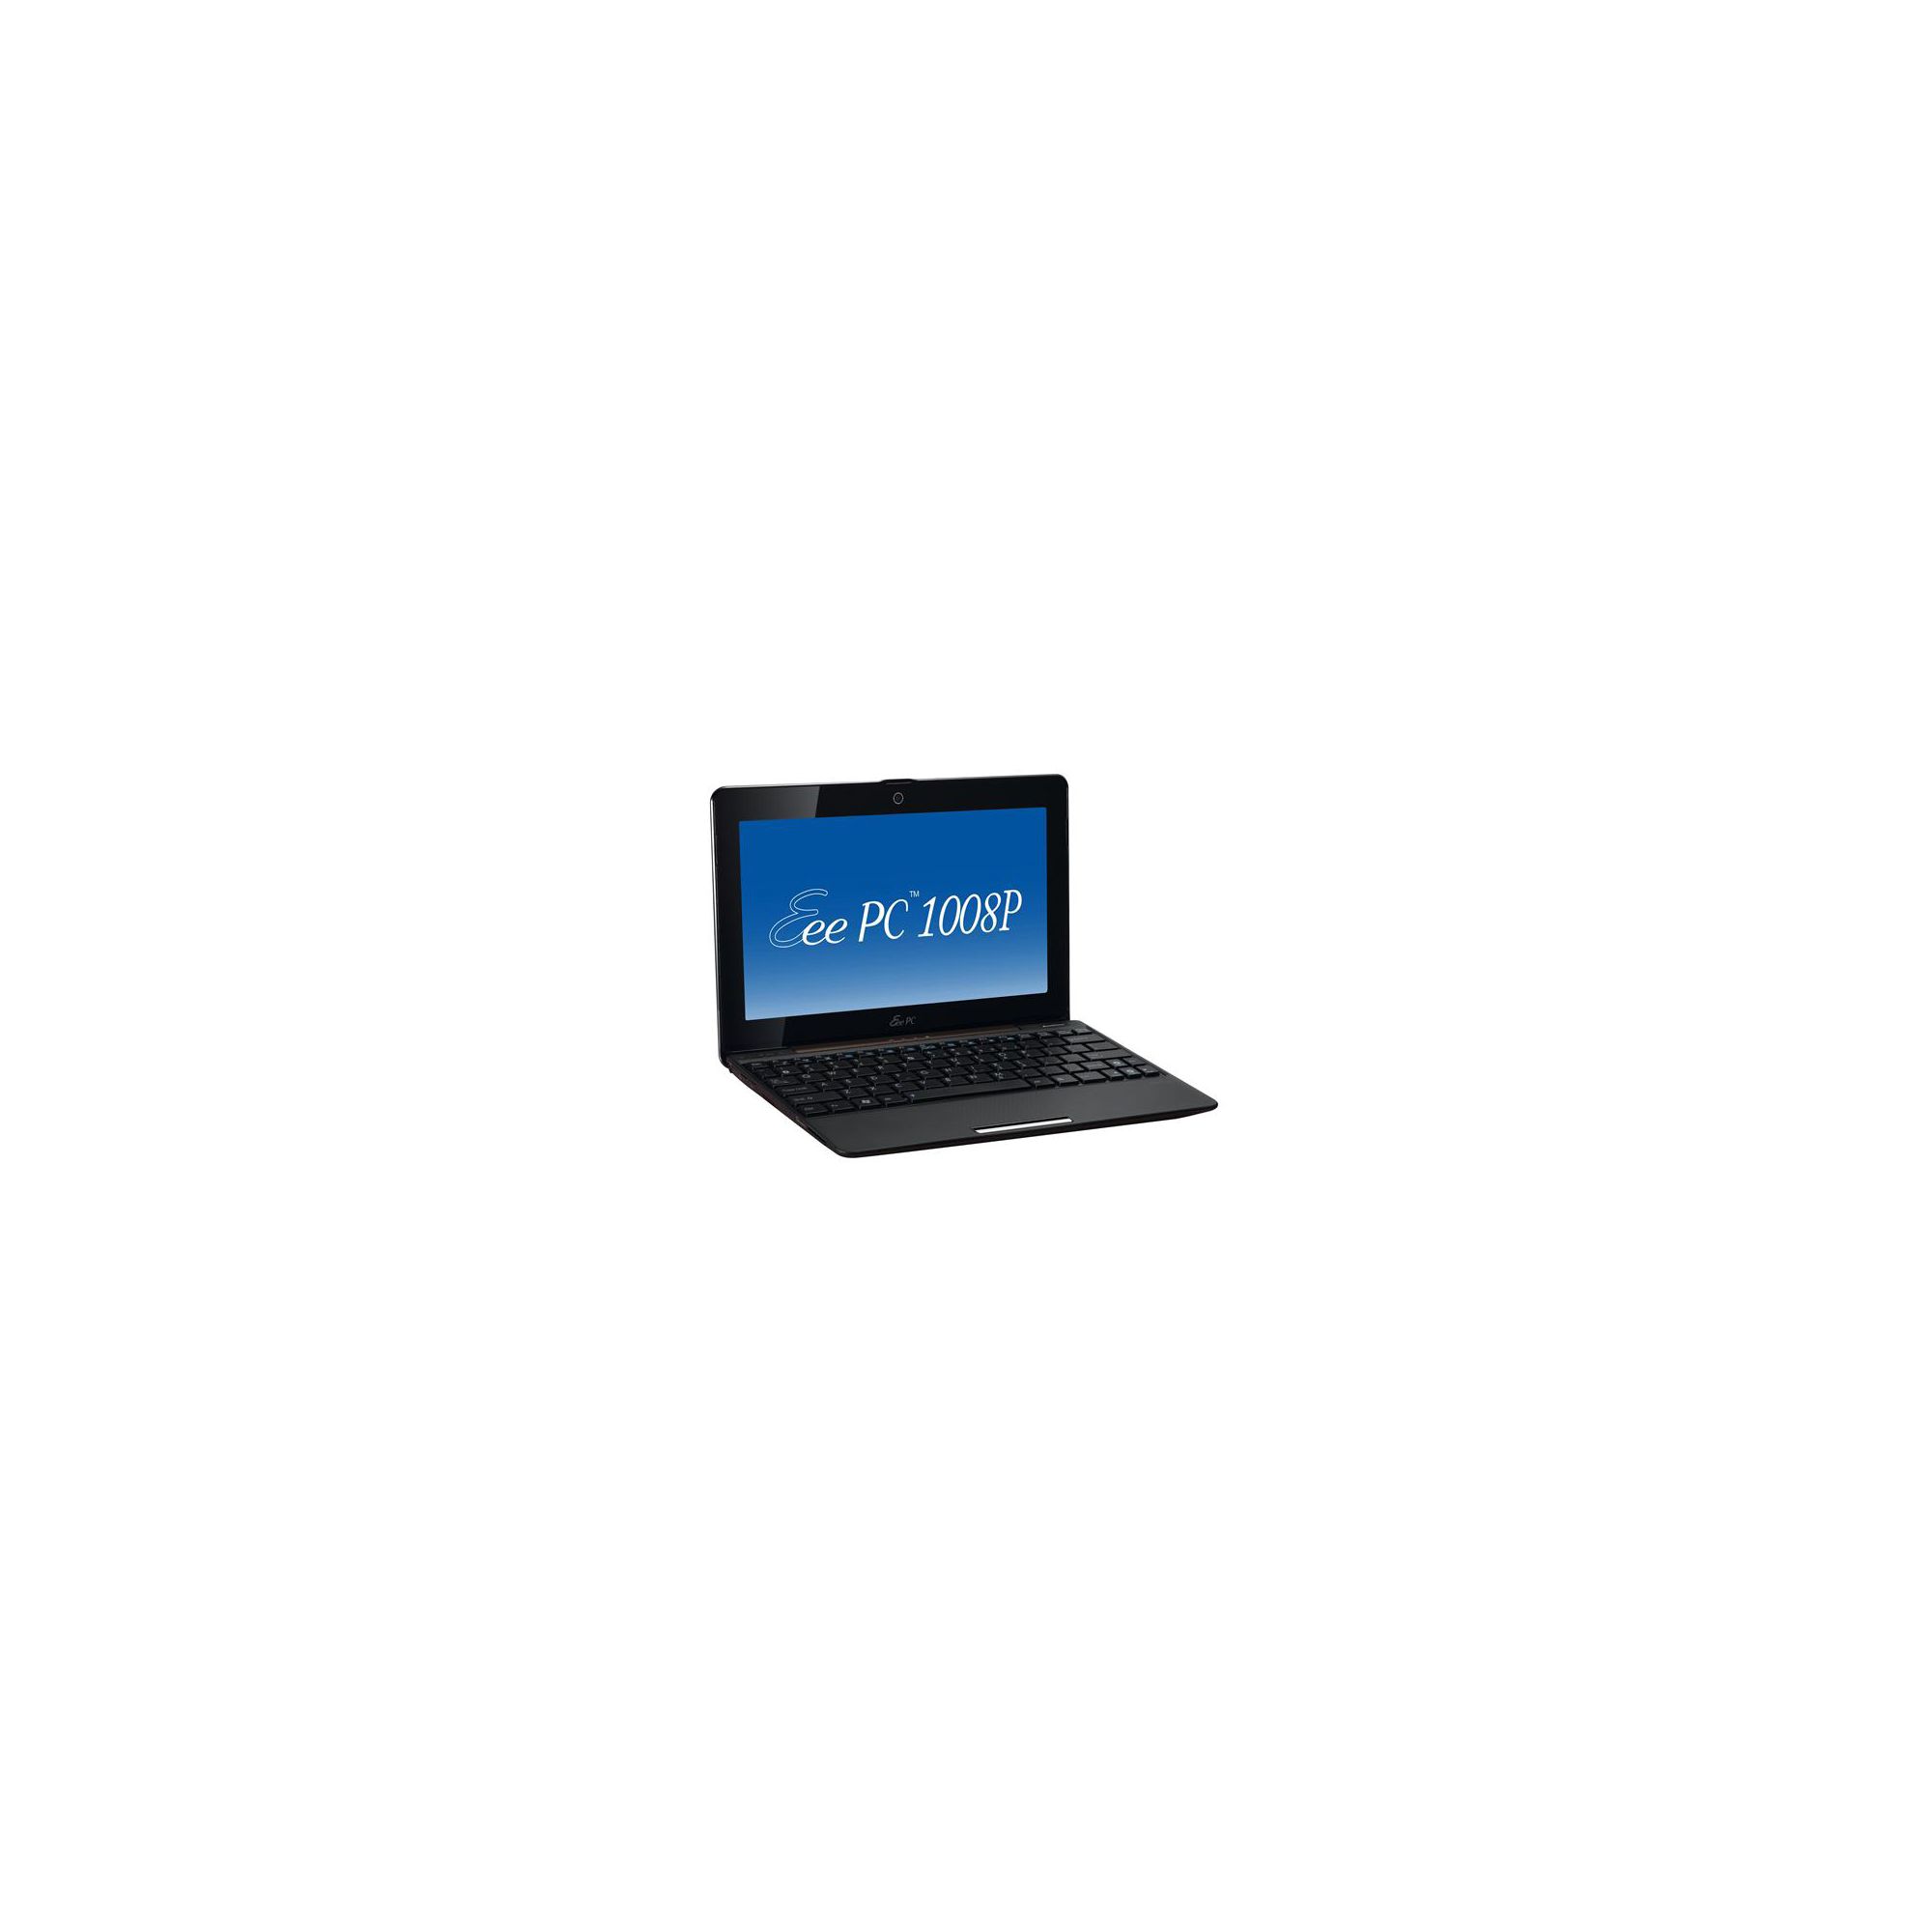 Asus Eee PC 1008P-BRN137S Netbook (1GB, 250GB, 10.1'' Display) Brown at Tesco Direct